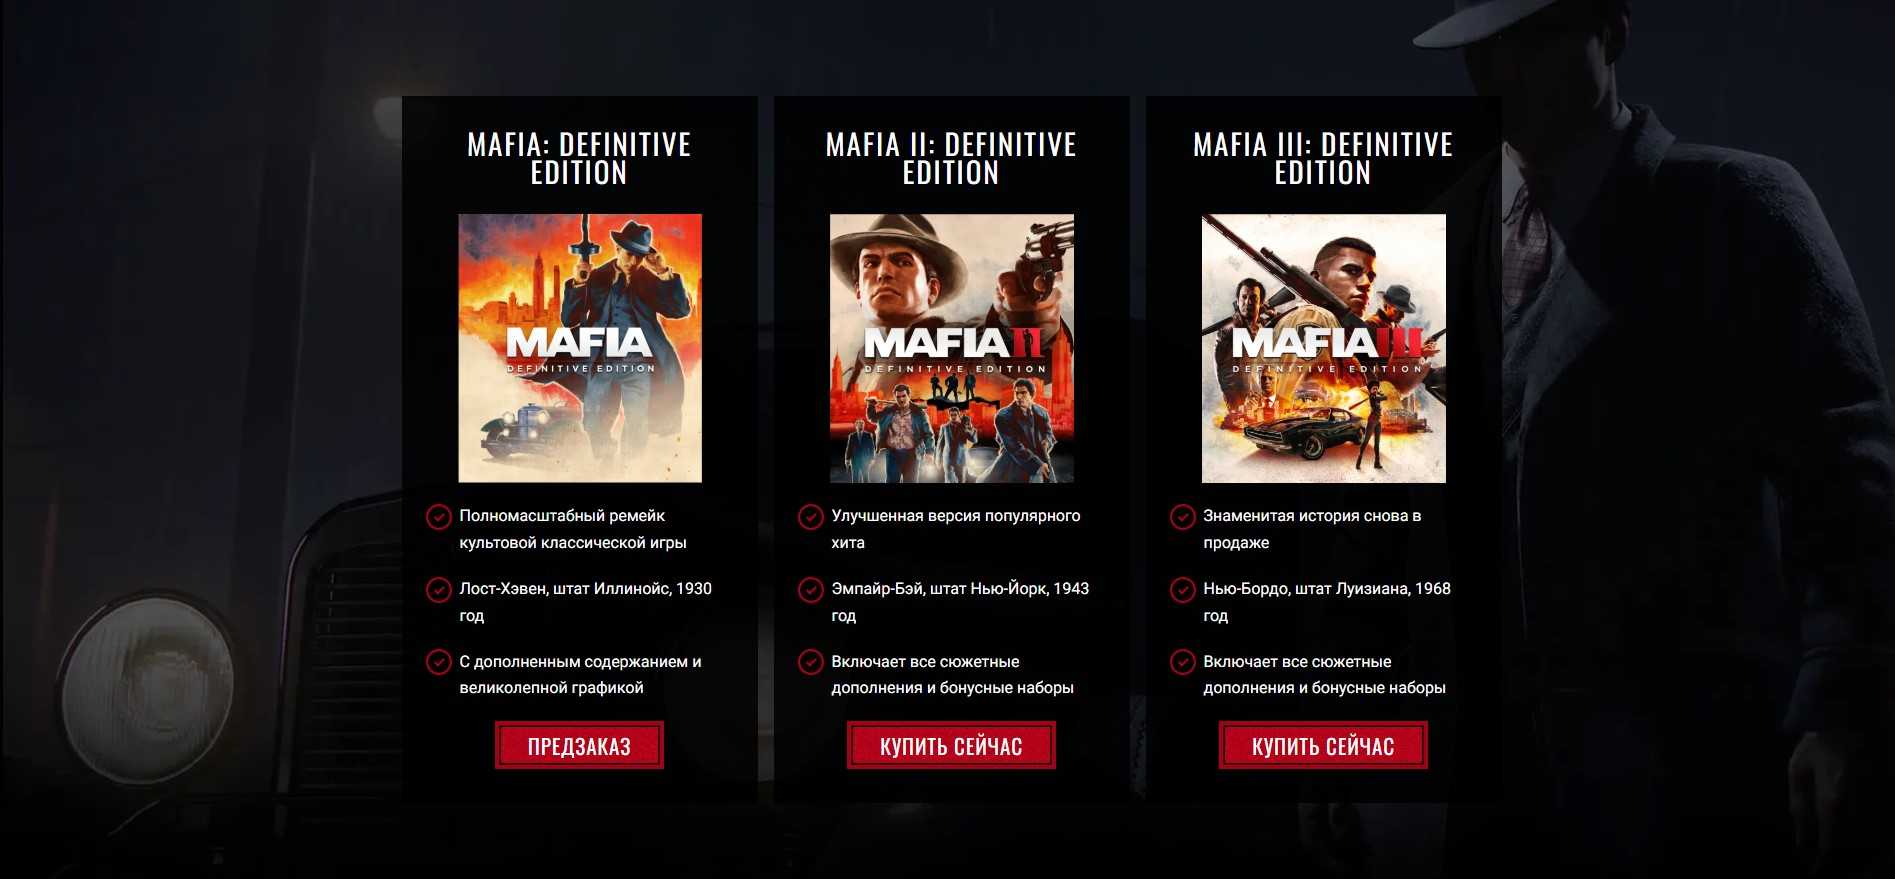 Mafia 2 definition edition ошибки баги и глюки - drrouter